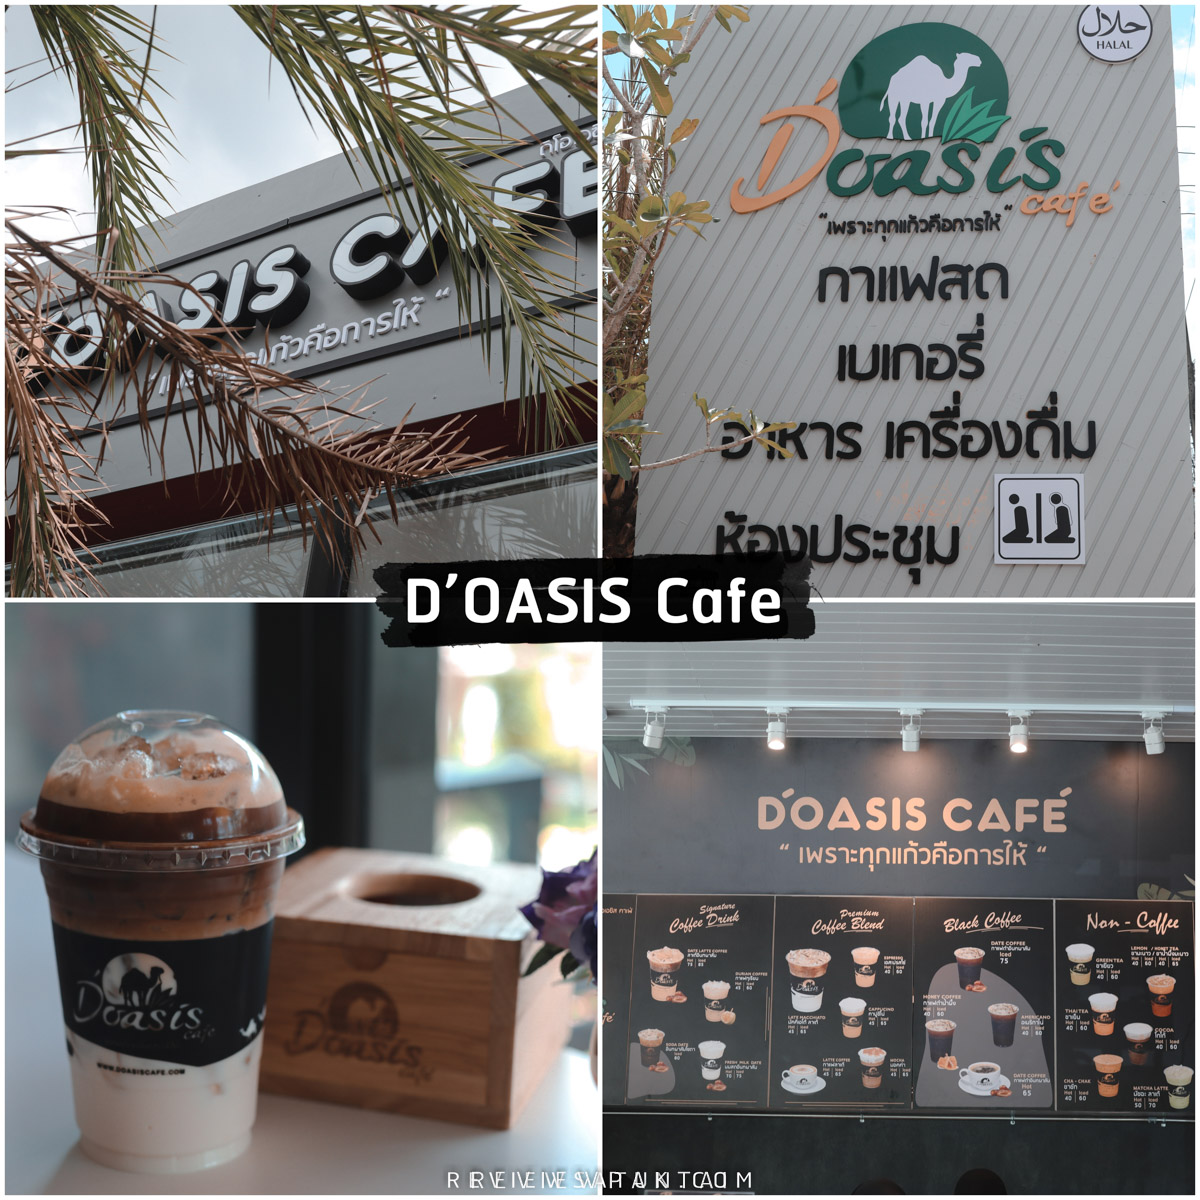  D-Oasis-คาเฟ่สุดสวยทางเข้าเมืองสตูล-กาแฟ-โกโก้อร่อย
รายละเอียด-คลิก
 จุดเช็คอิน,หลีเป๊ะ,สตูลสดยกกำลังสาม,satunwonderland,เที่ยวเมืองไทยAmazingกว่าเดิม,ชีพจรลงSouth